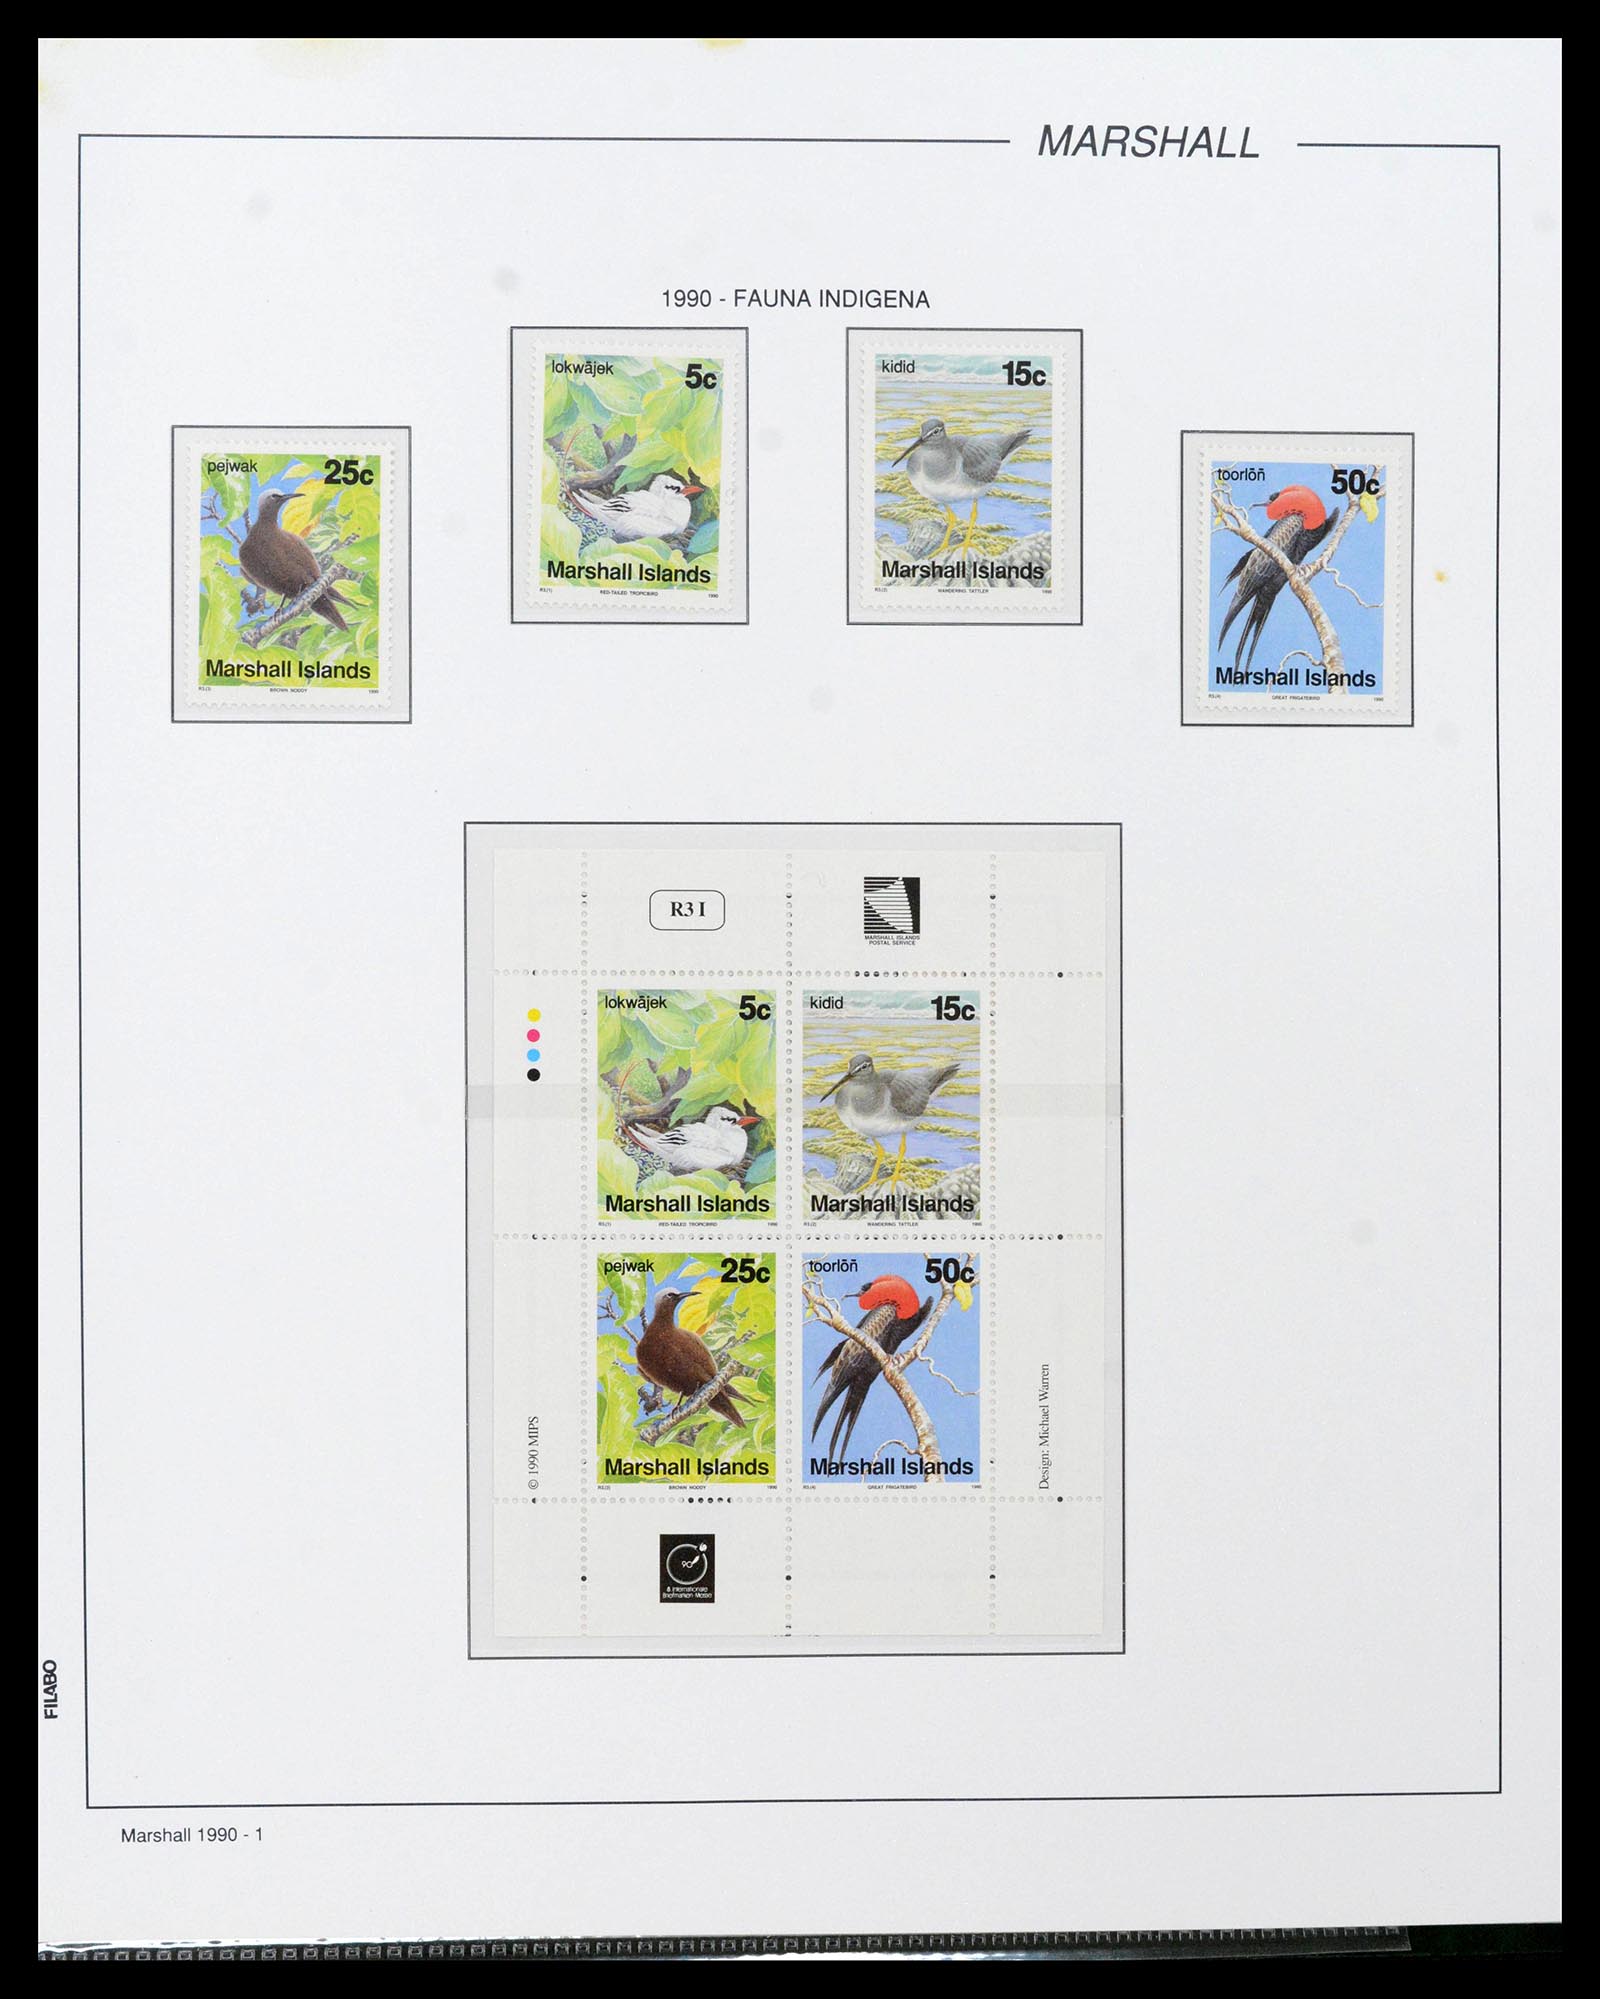 39222 0144 - Stamp collection 39222 Palau, Micronesia and Marshall islands 1980-1995.